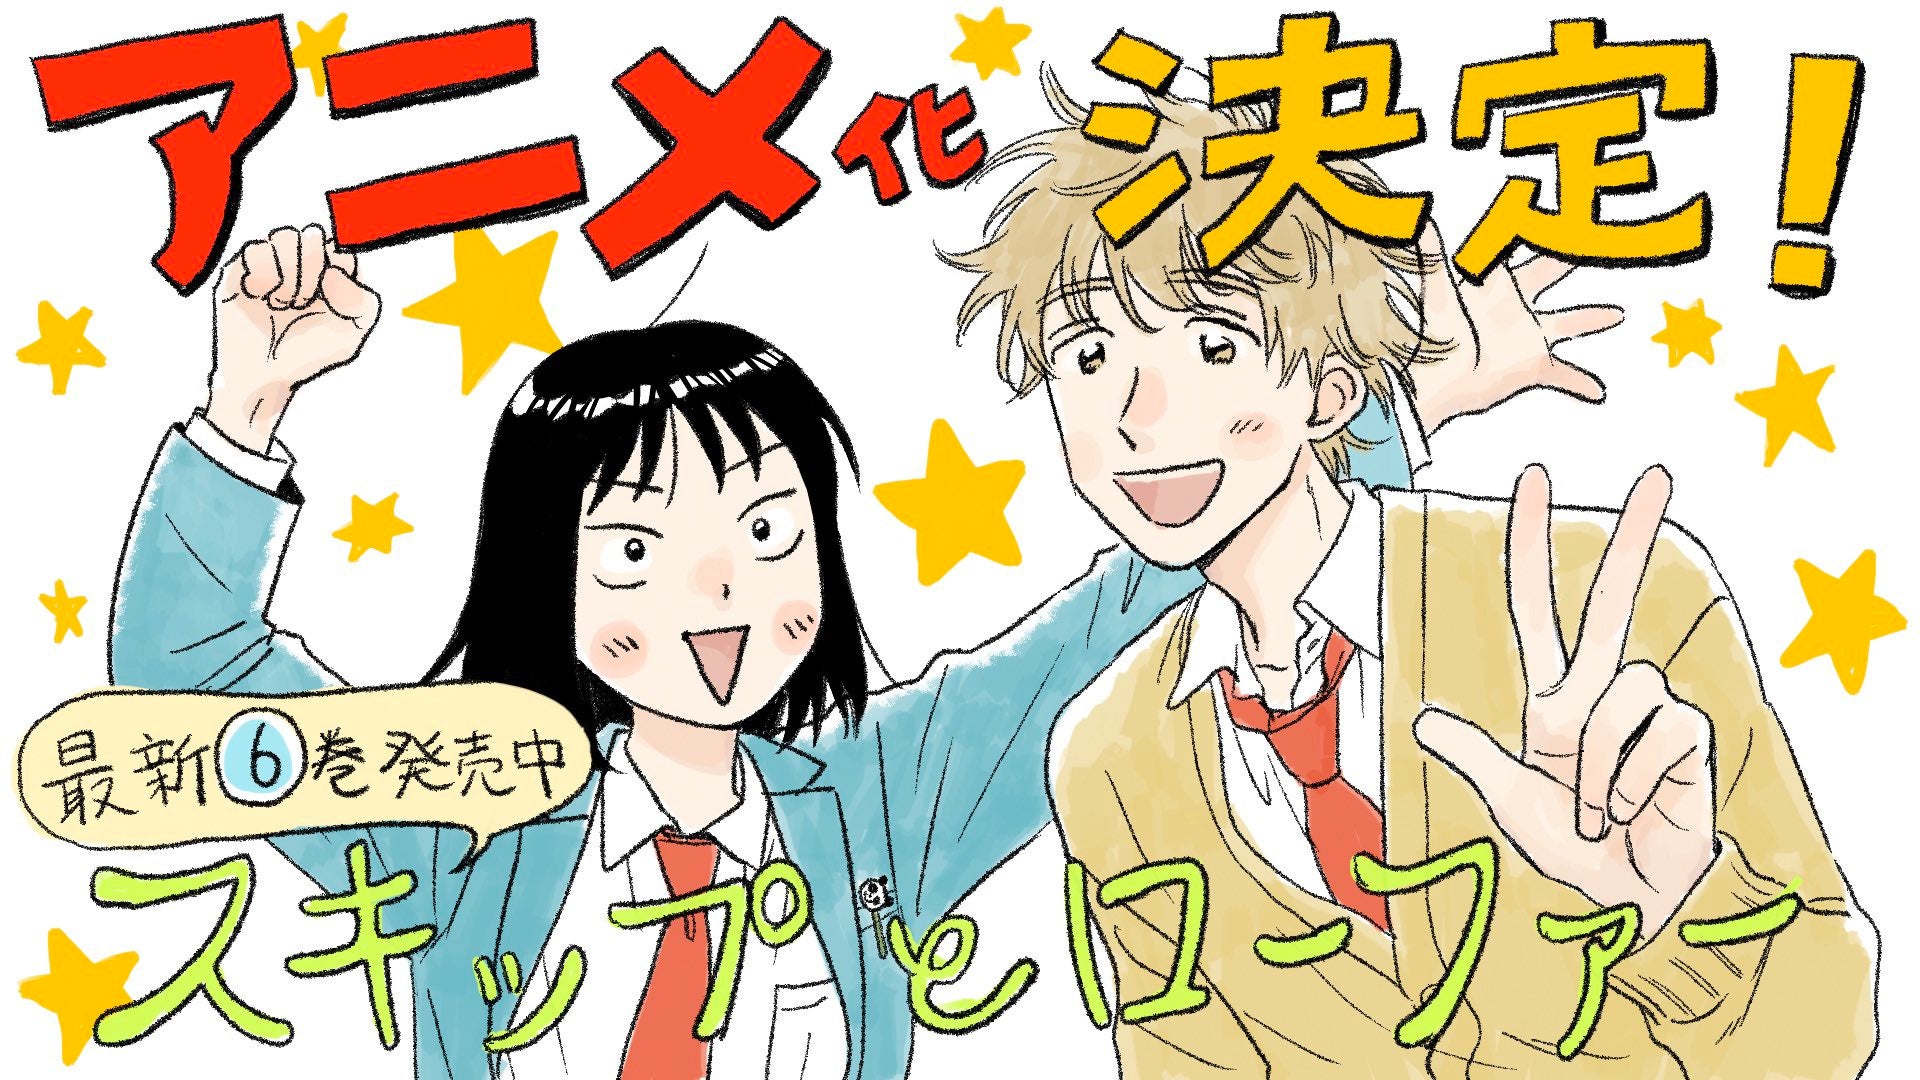 Skip and Loafer Anime Announcement Celebration Illustration